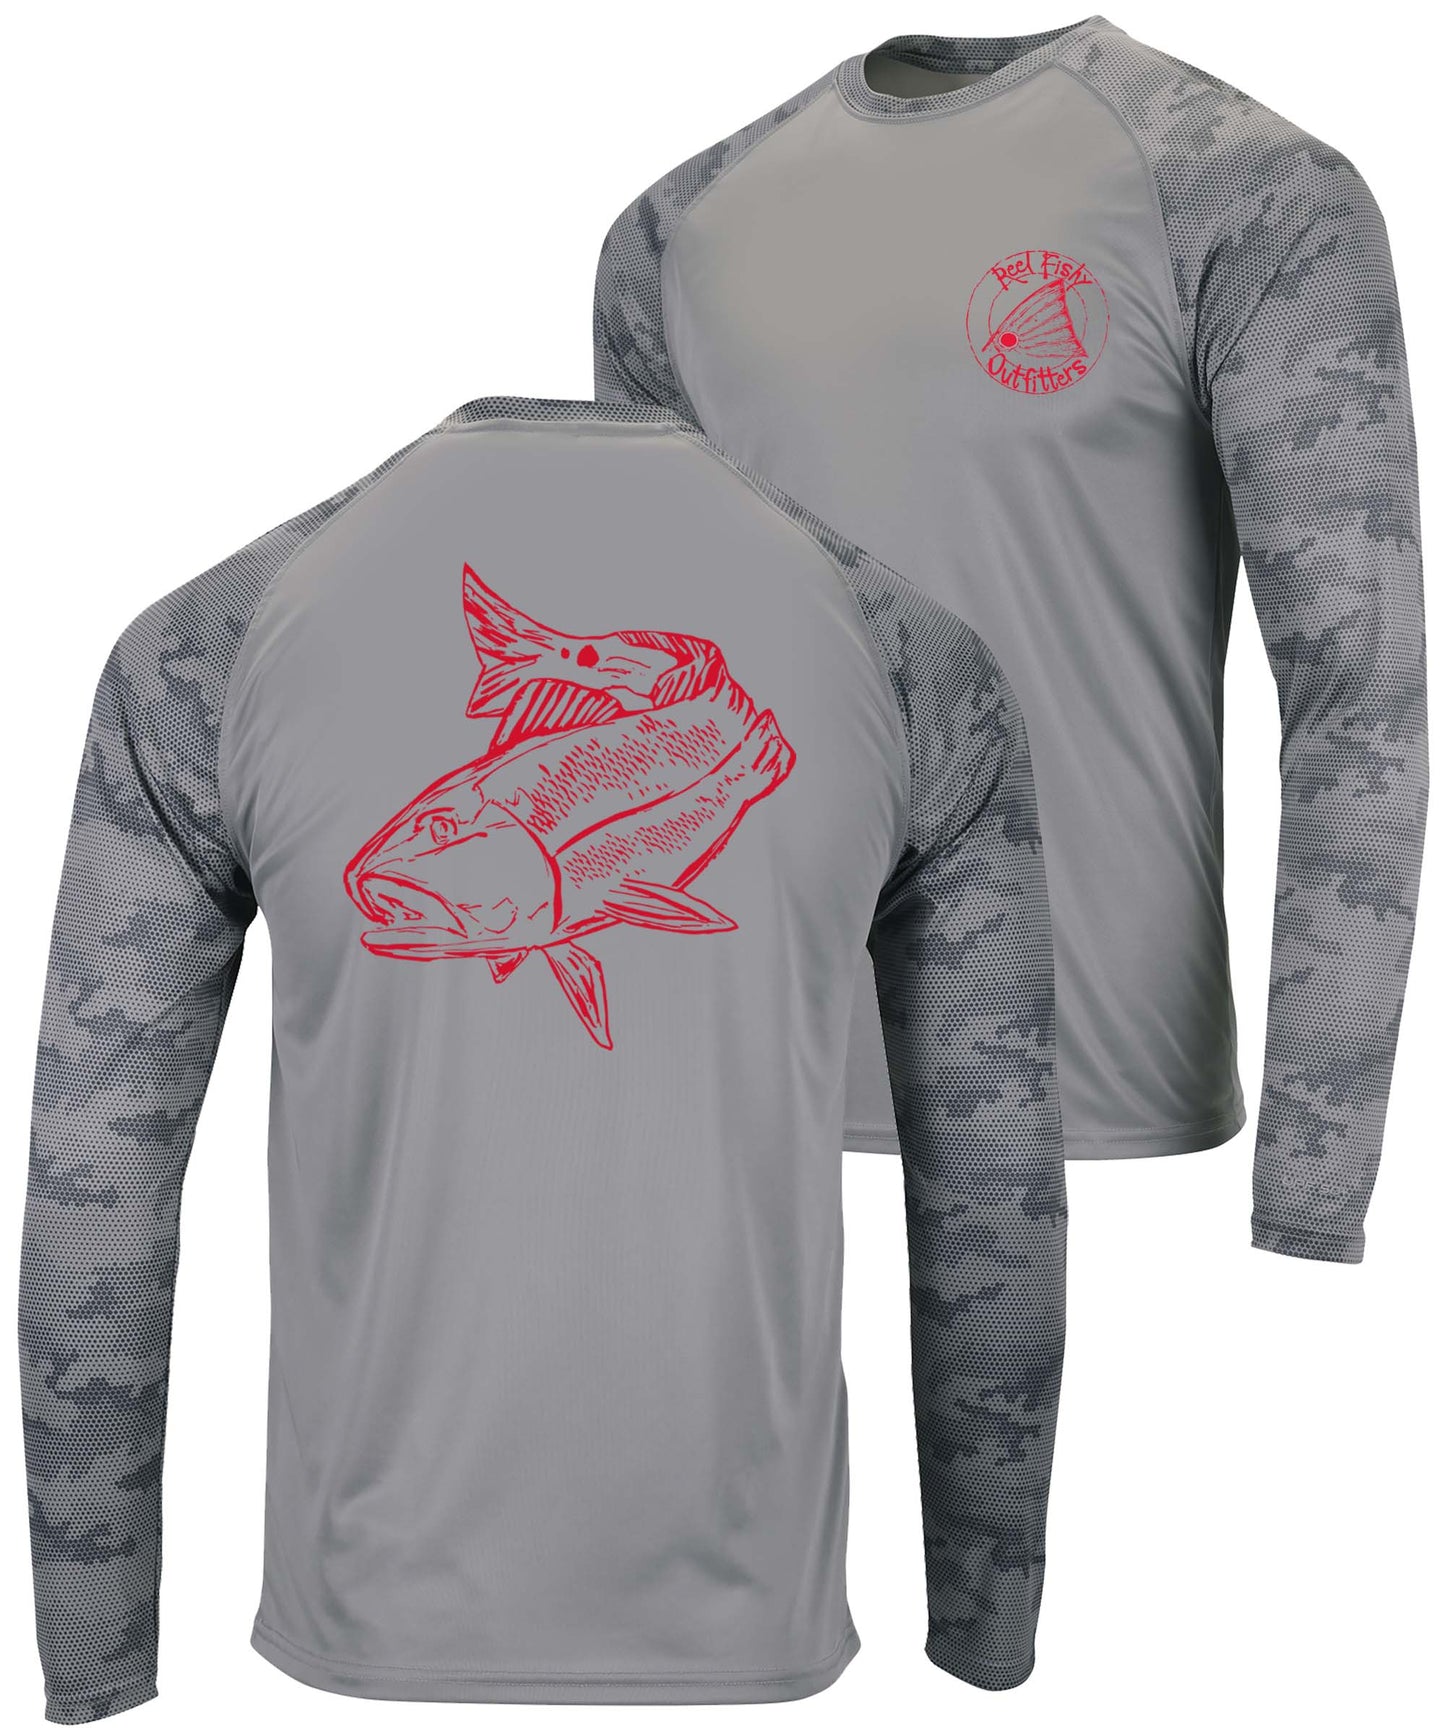 Redfish Performance Dry-Fit Fishing shirts with Sun Protection - Medium Gray Digital Camo Long Sleeve